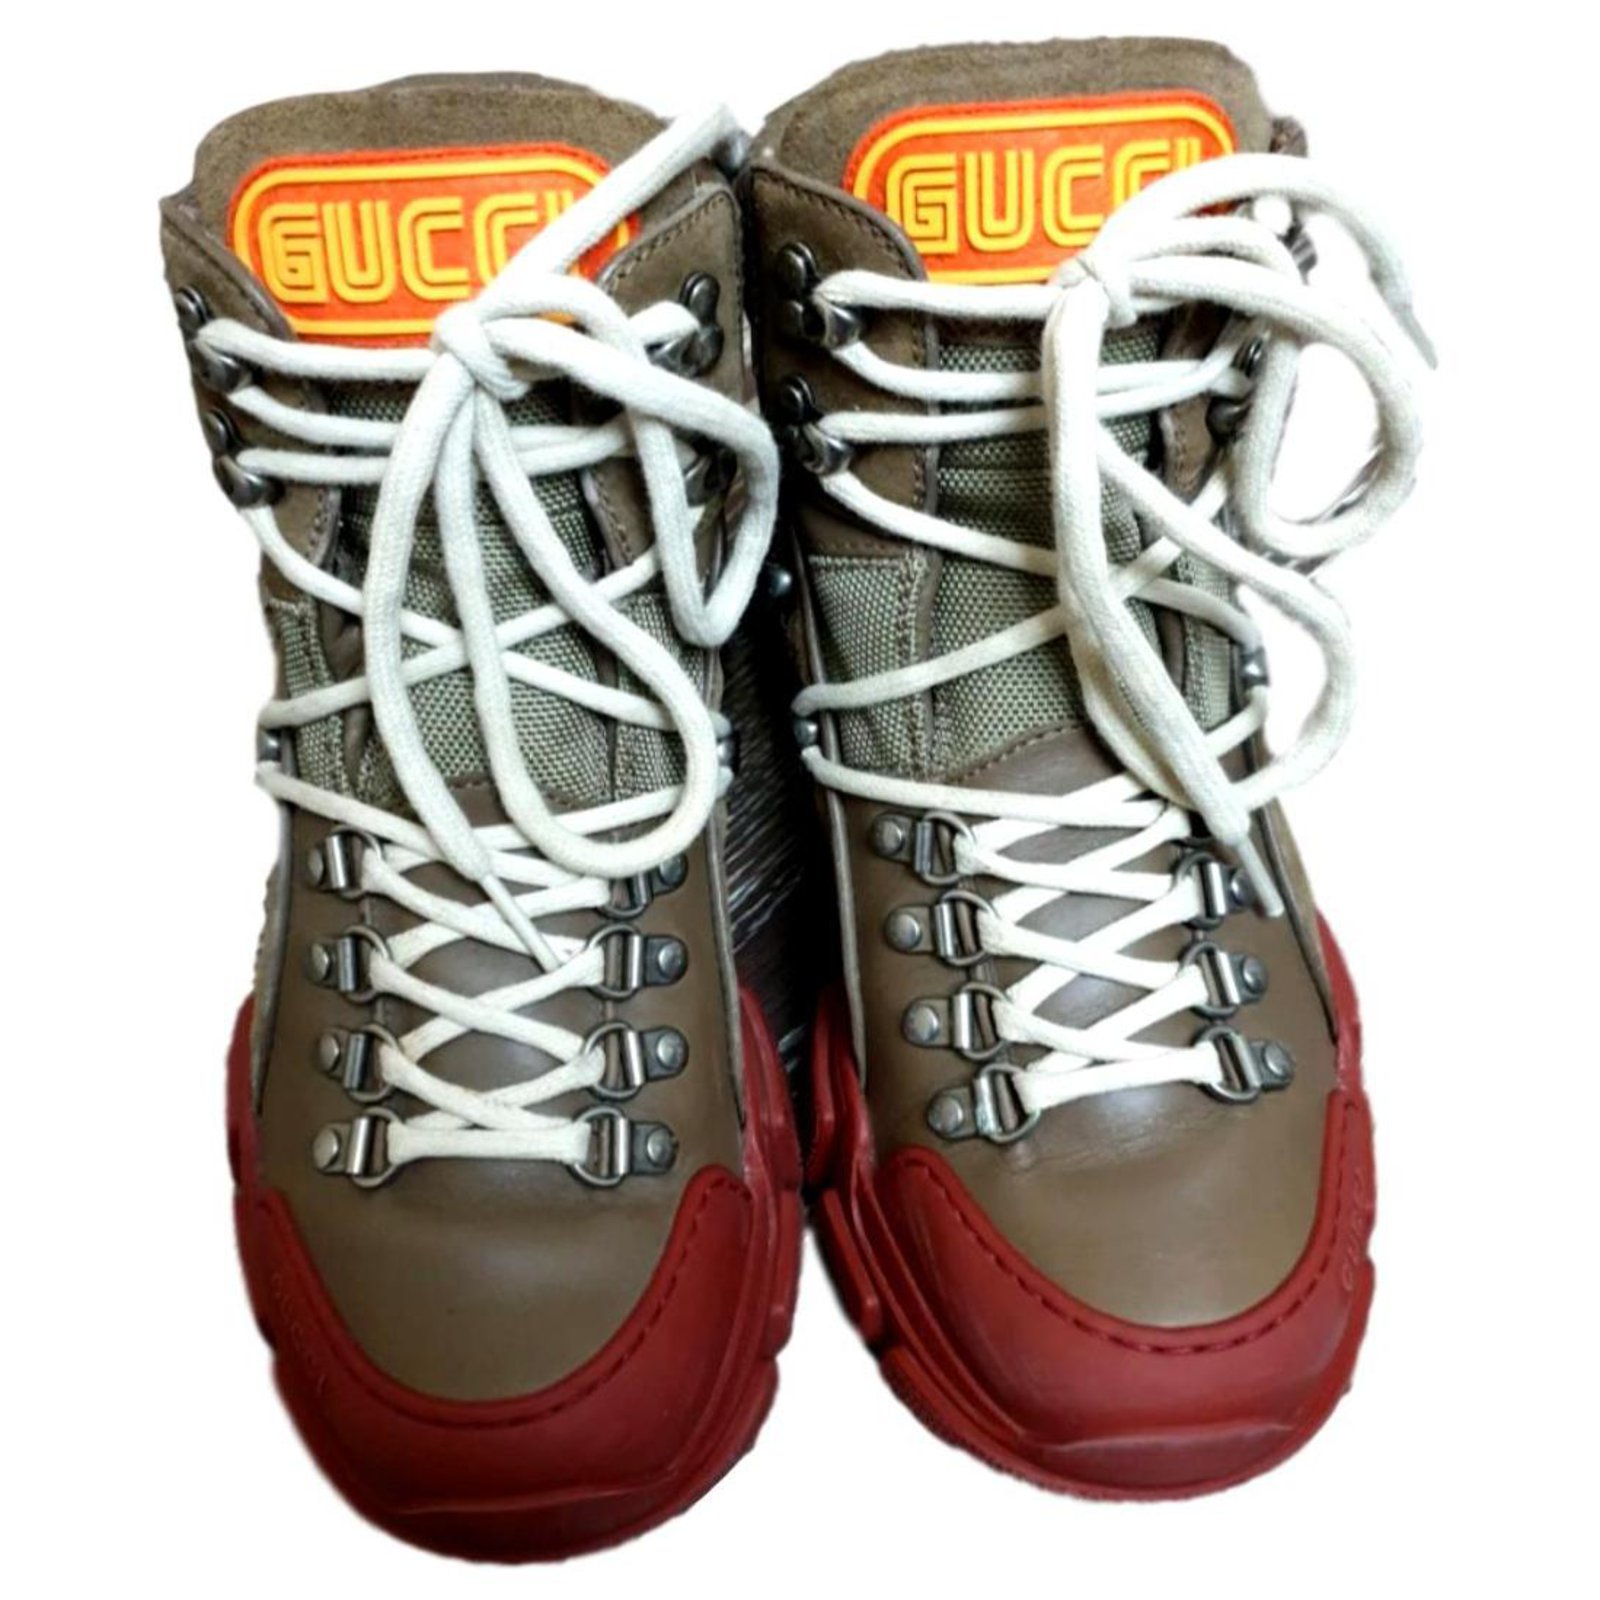 gucci boots flashtrek